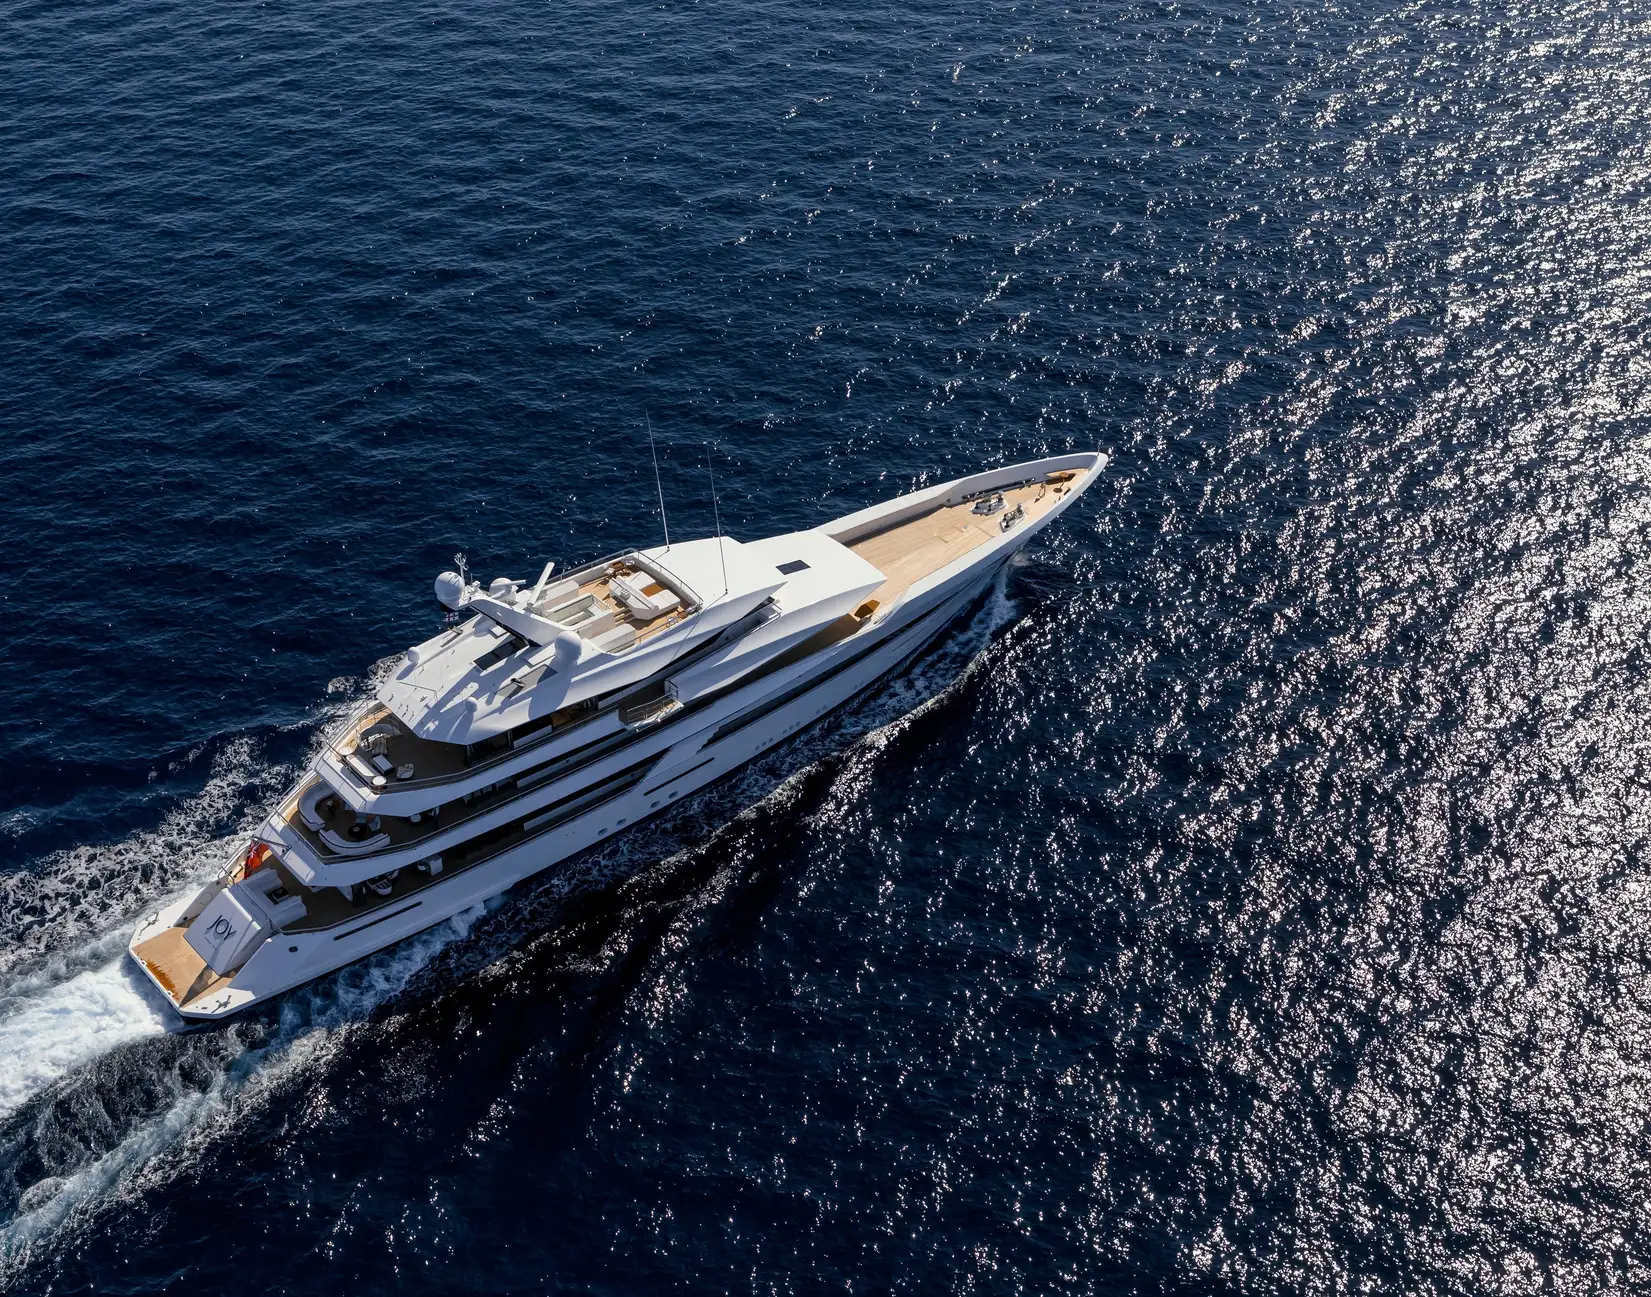 200 foot yacht